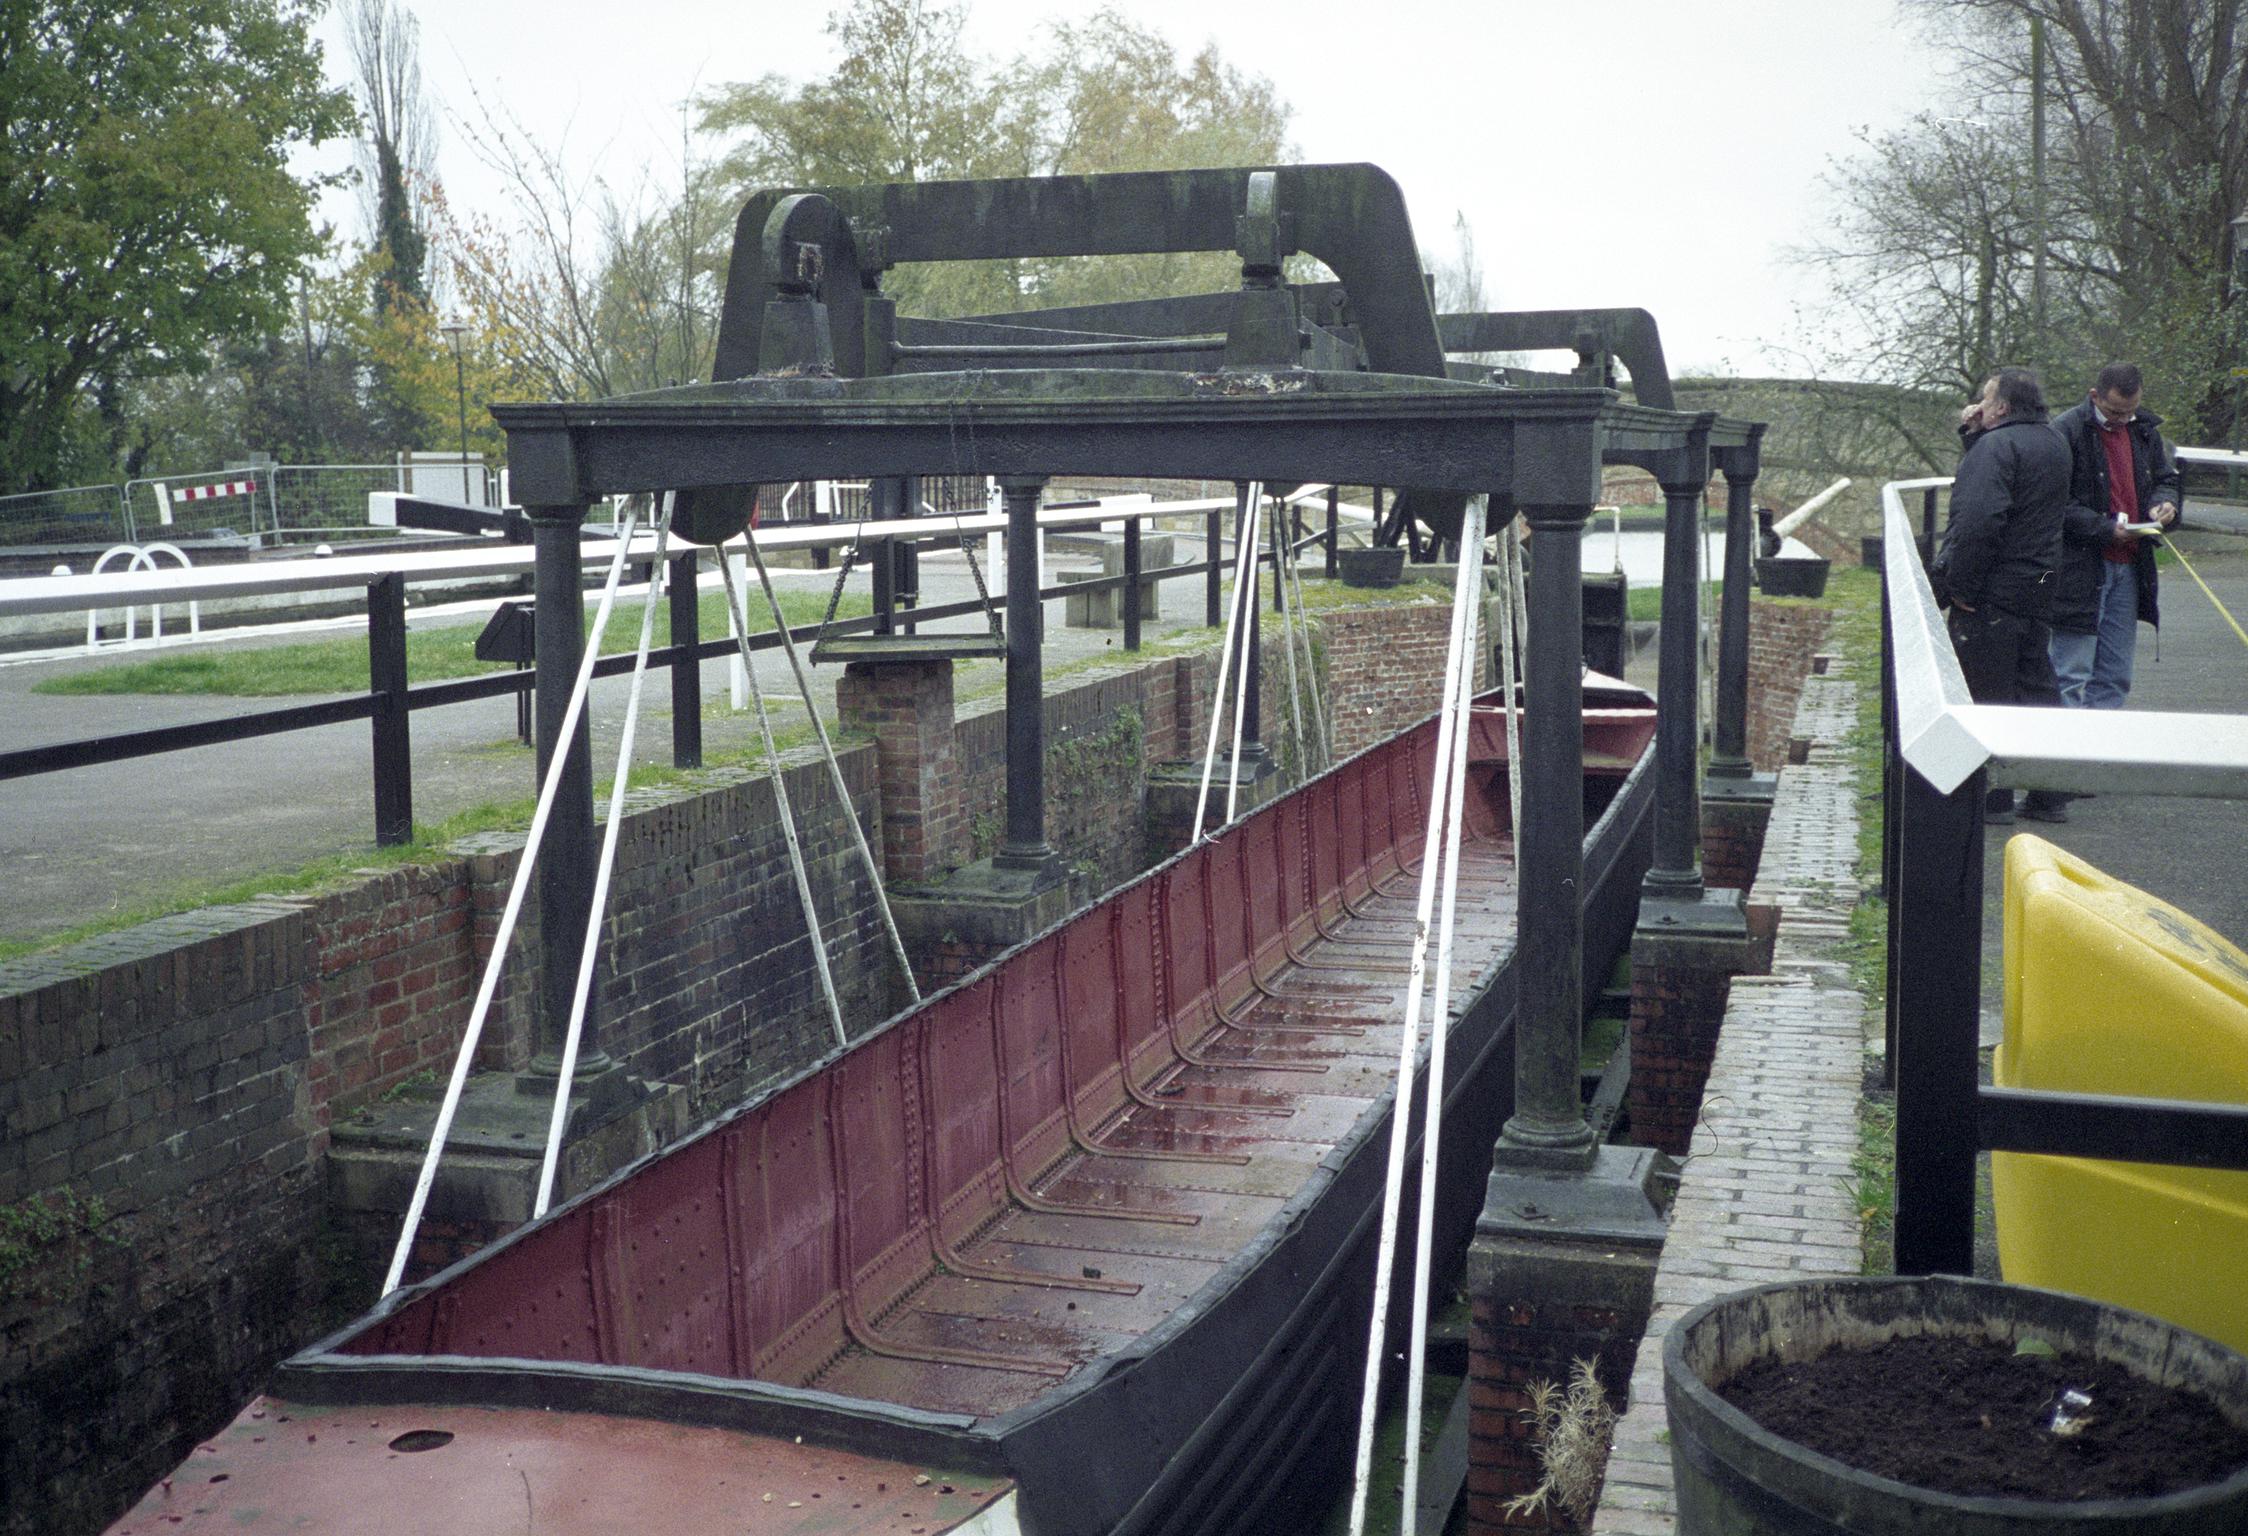 Glamorganshire Canal boat weighing machine, negative